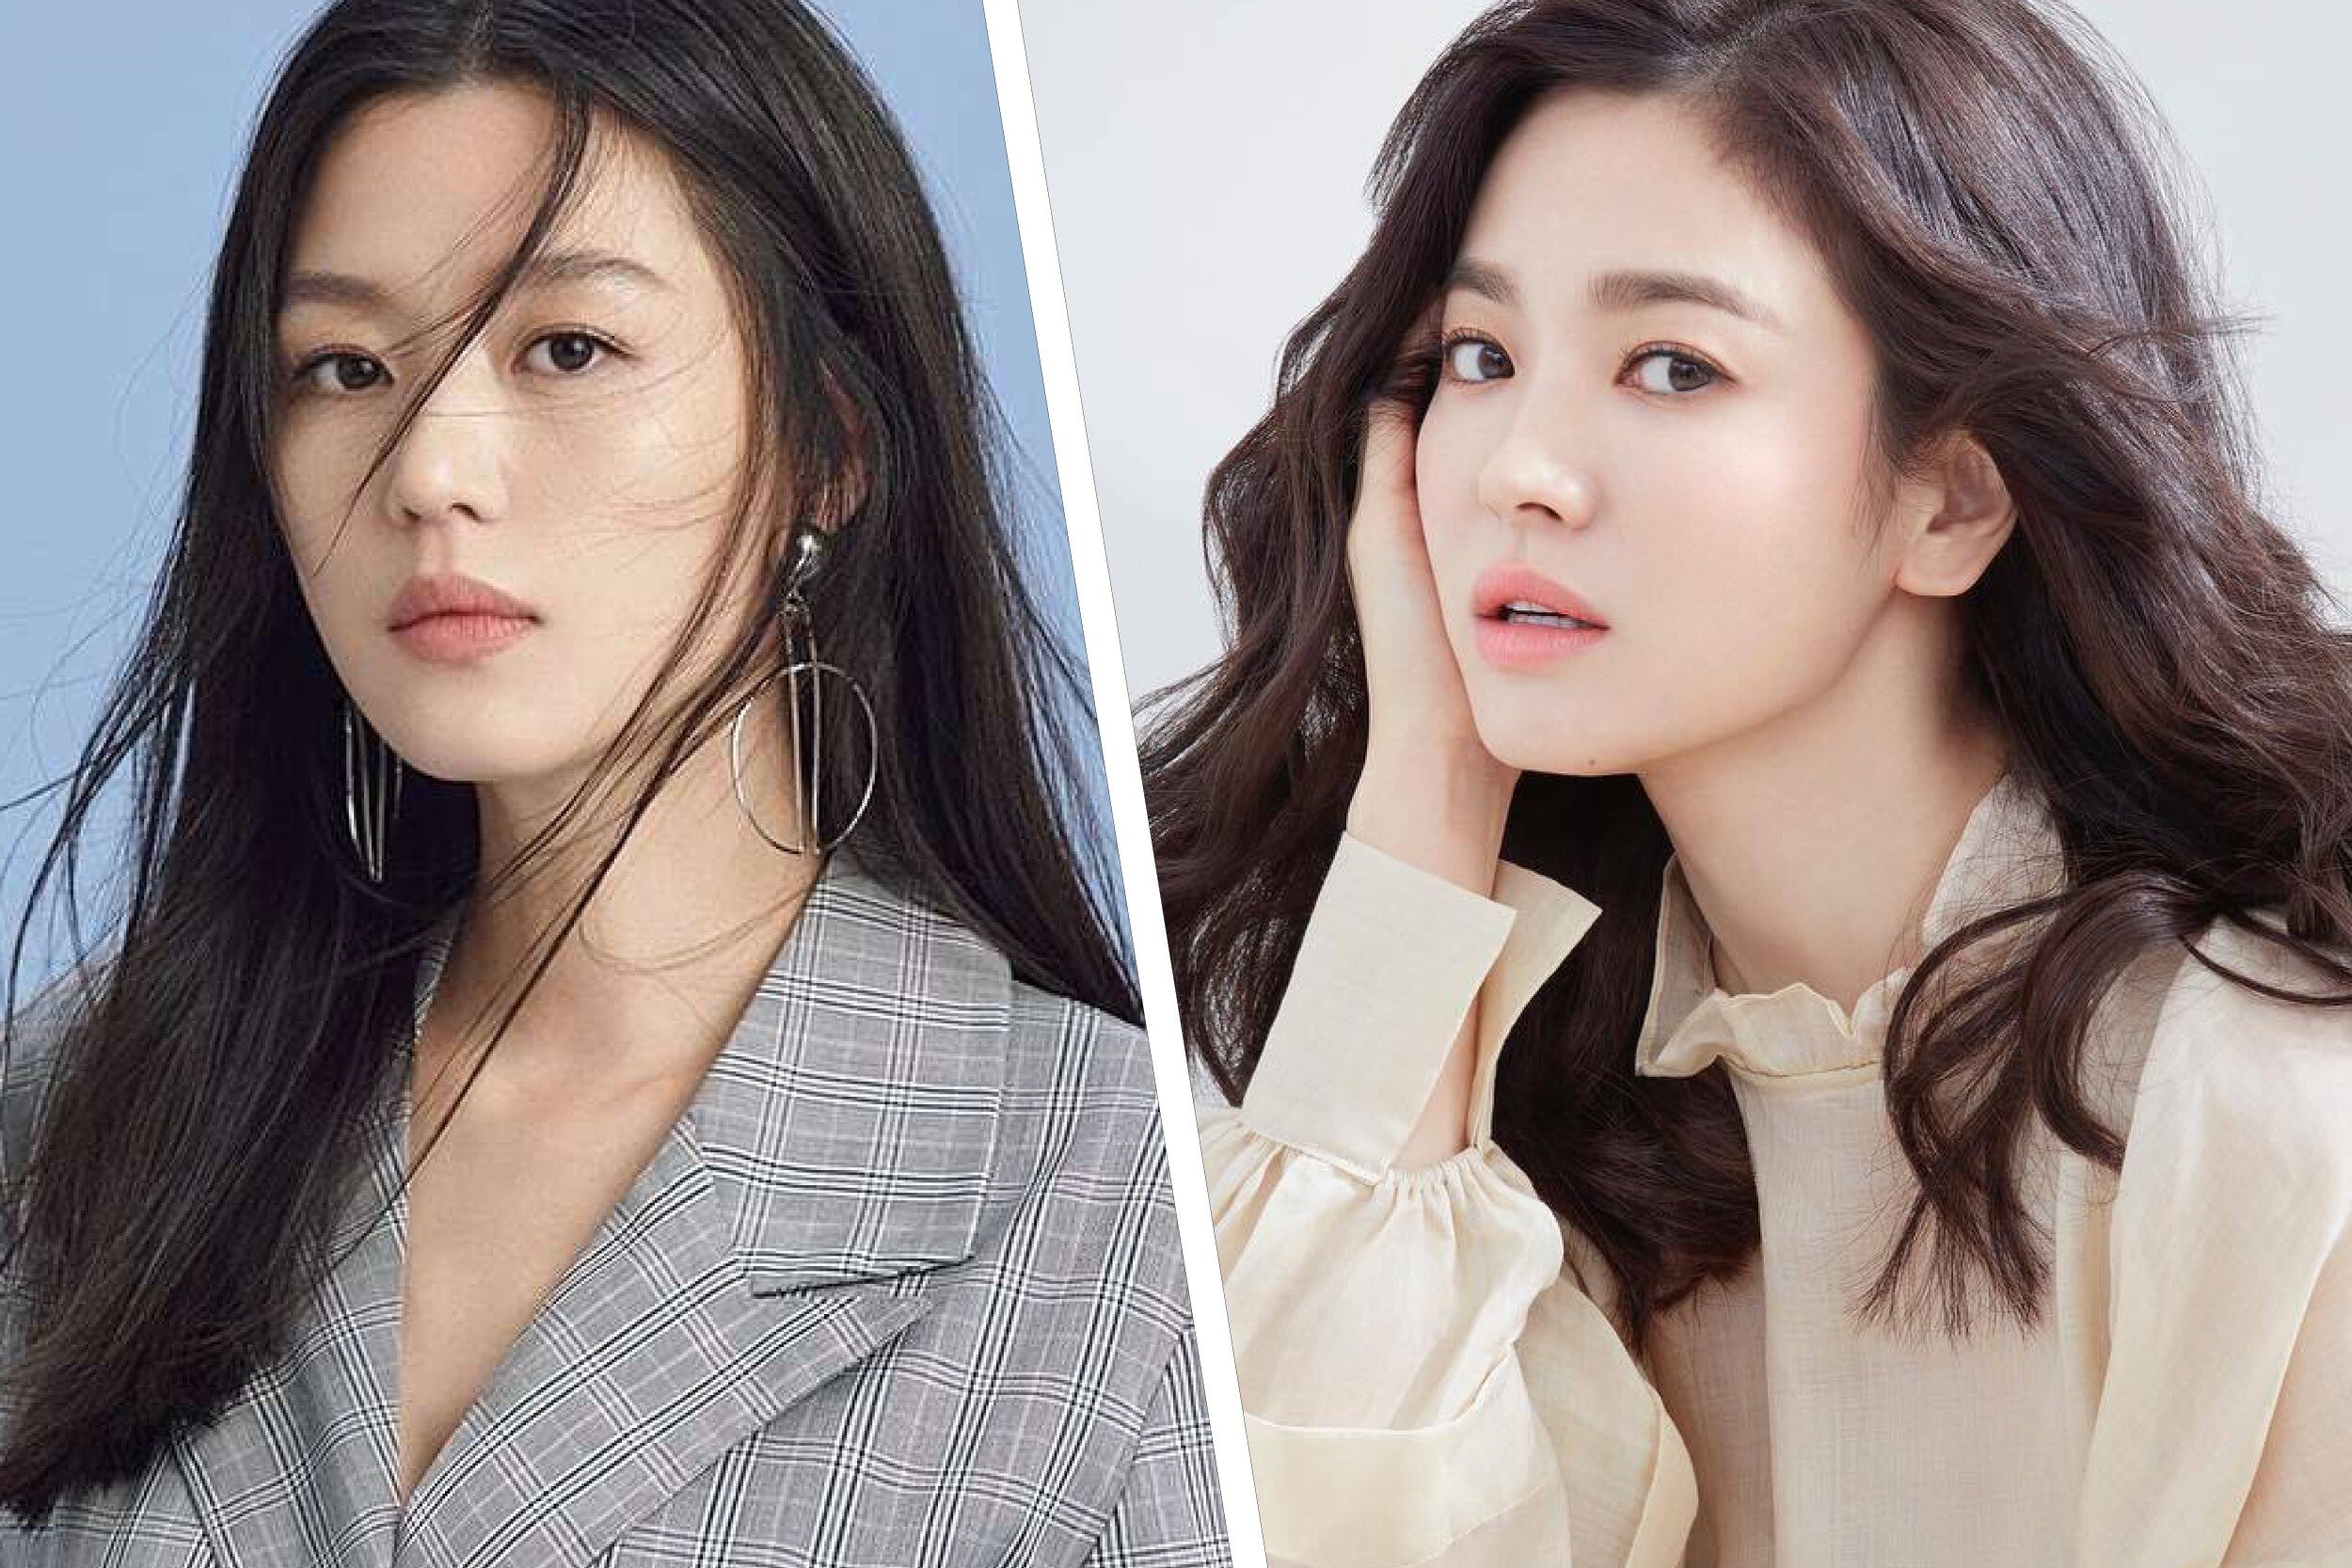 Jun Ji Hyun Vs Song Hye Kyo Korean Drama Stars Of My Love From The Star And Descendants Of The